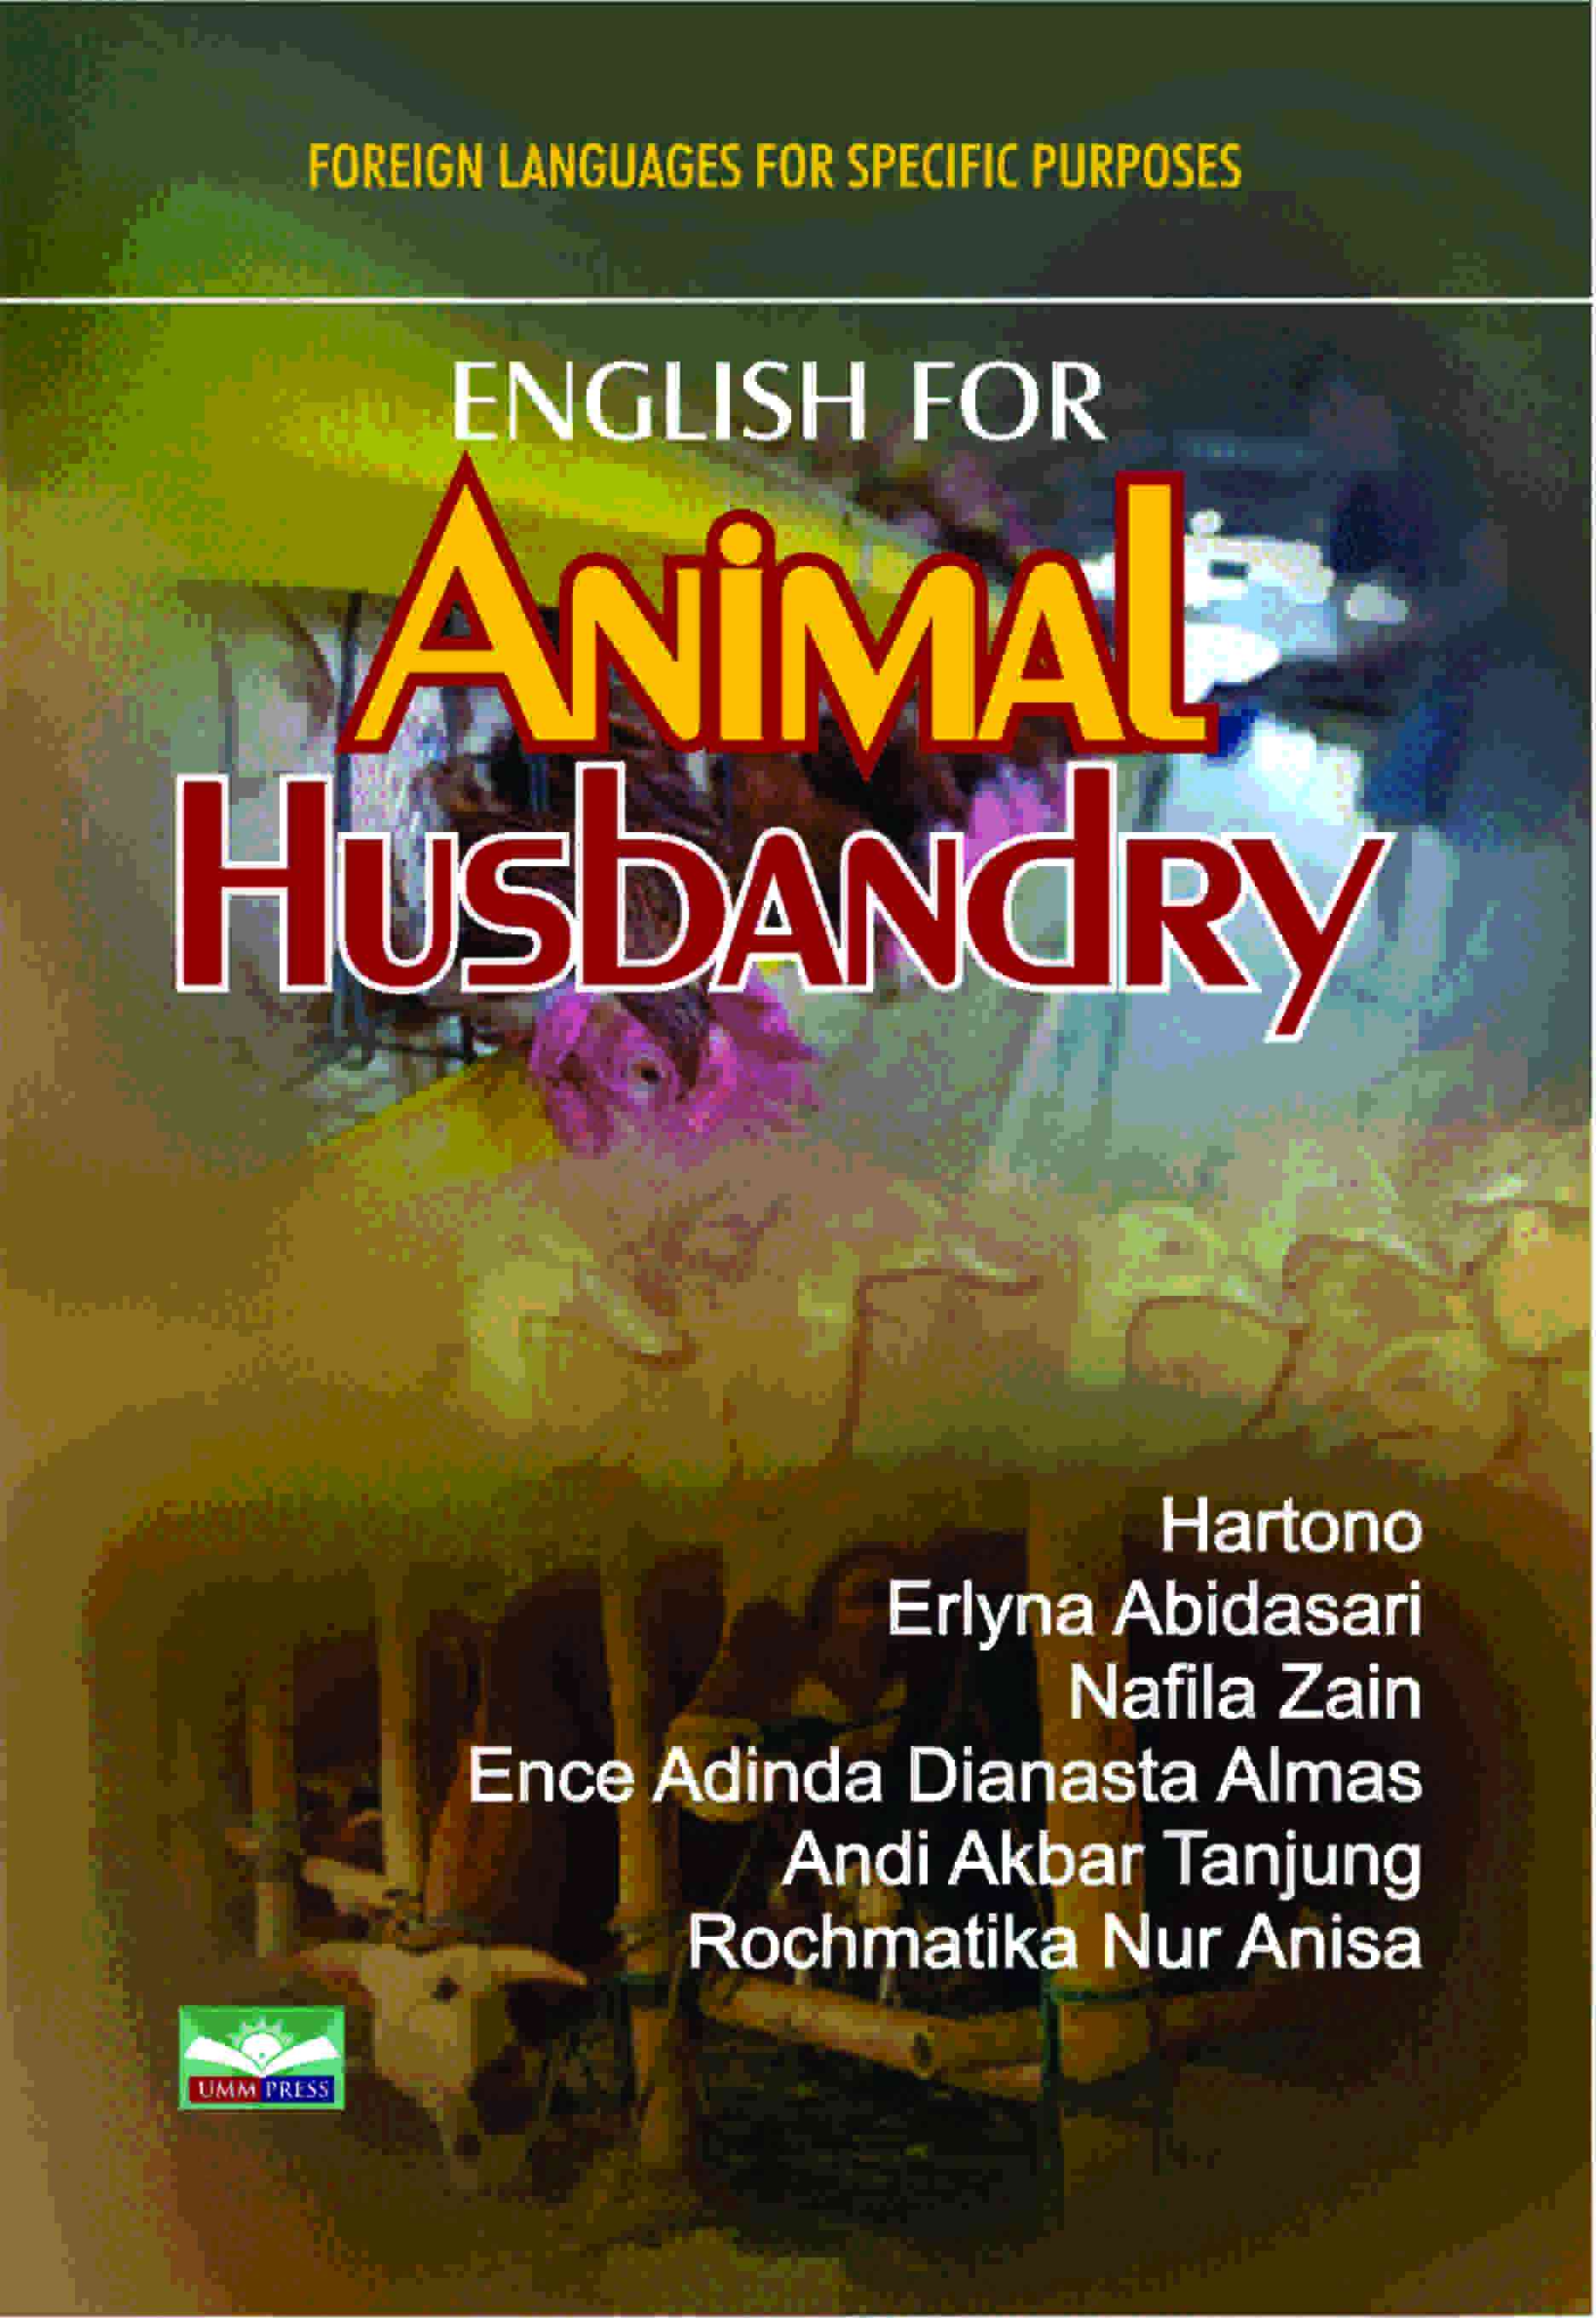 FLSP - ENGLISH FOR ANIMAL HUSBANDRY